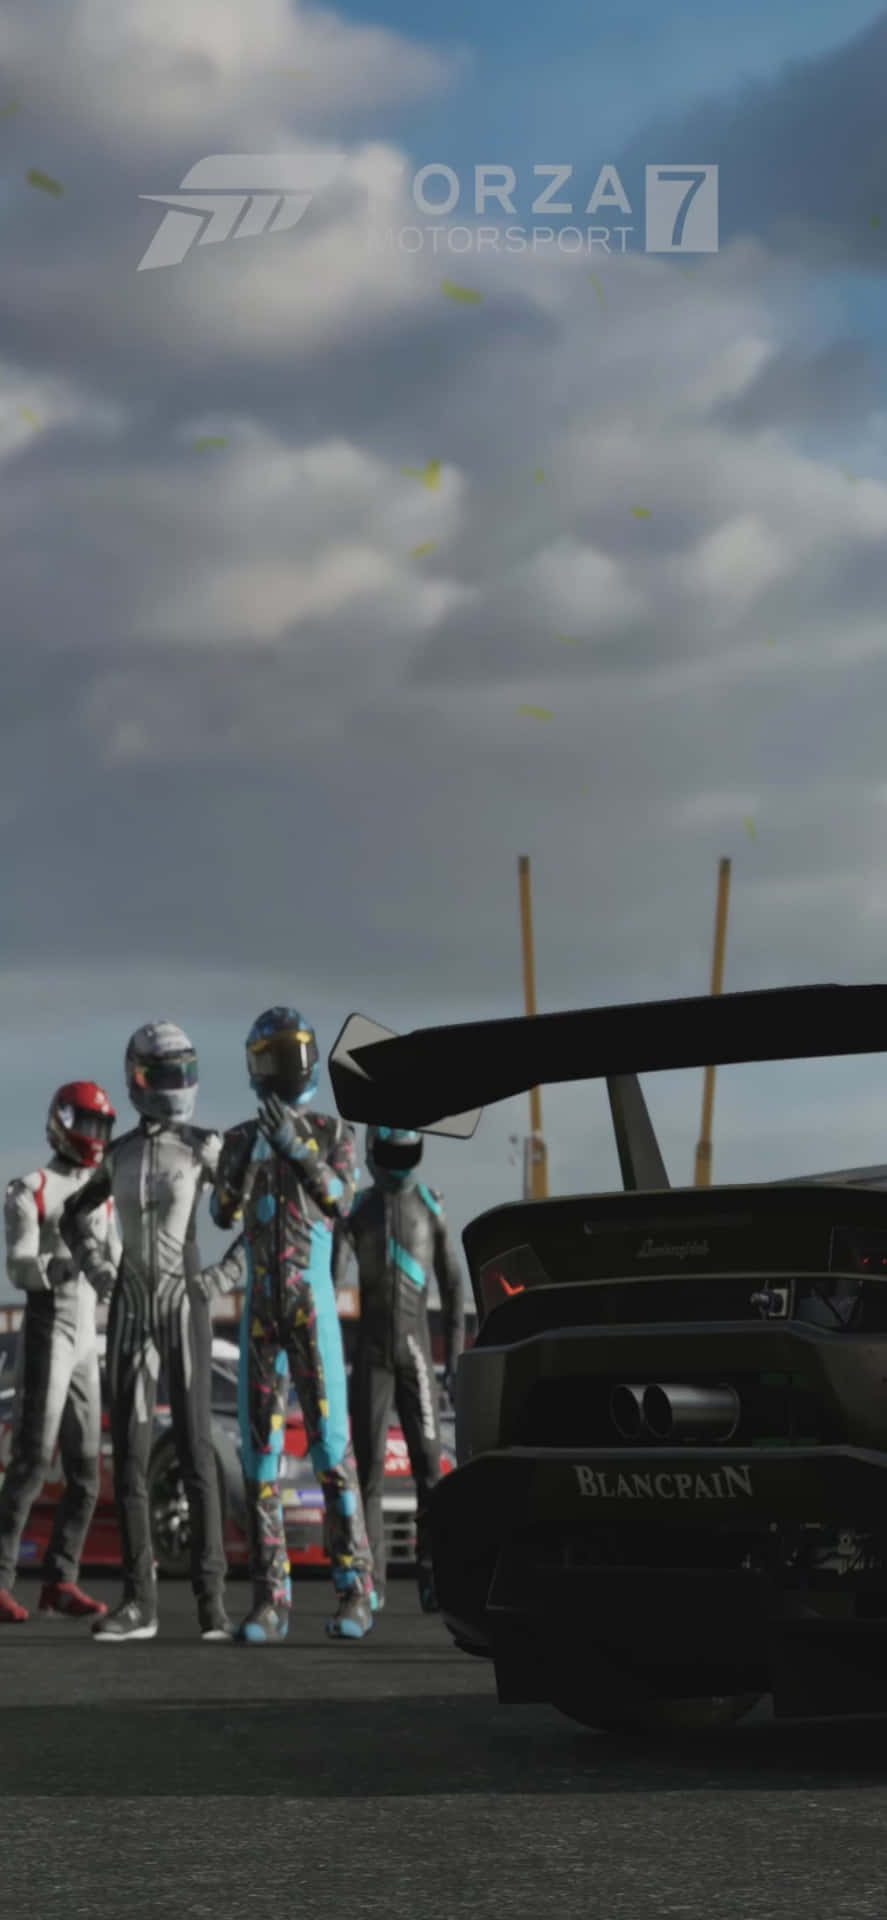 Rider iPhone X Forza Motorsport 7 Background